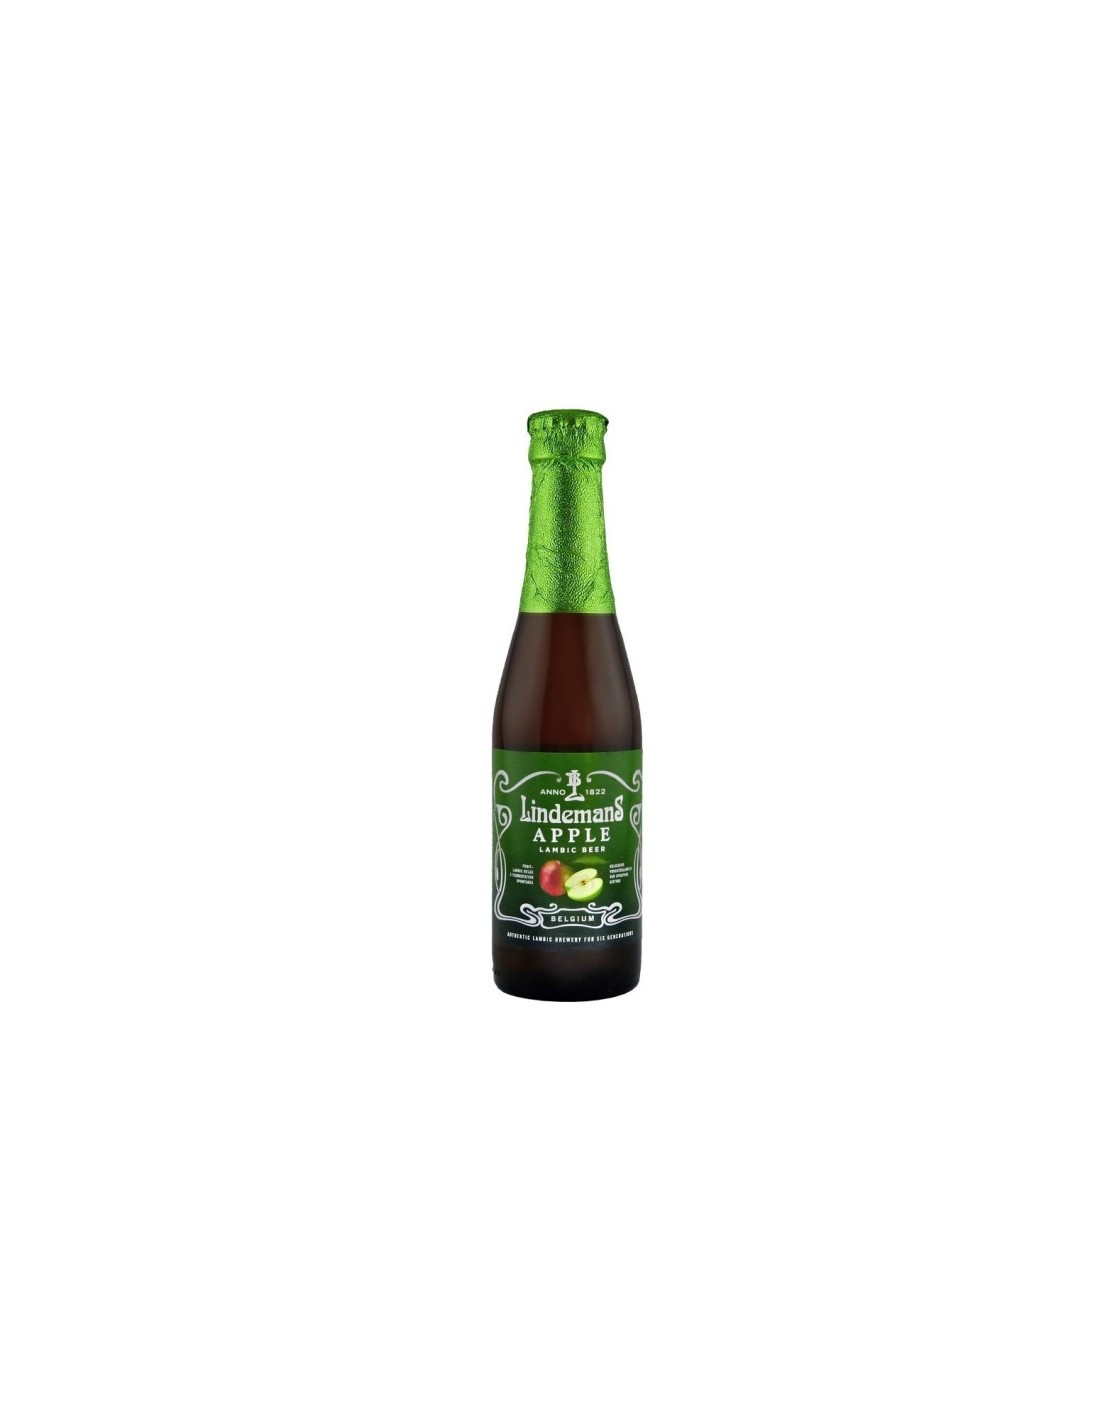 Bere bruna Lindemans Apple, 3.5% alc., 0.25L, Belgia alcooldiscount.ro